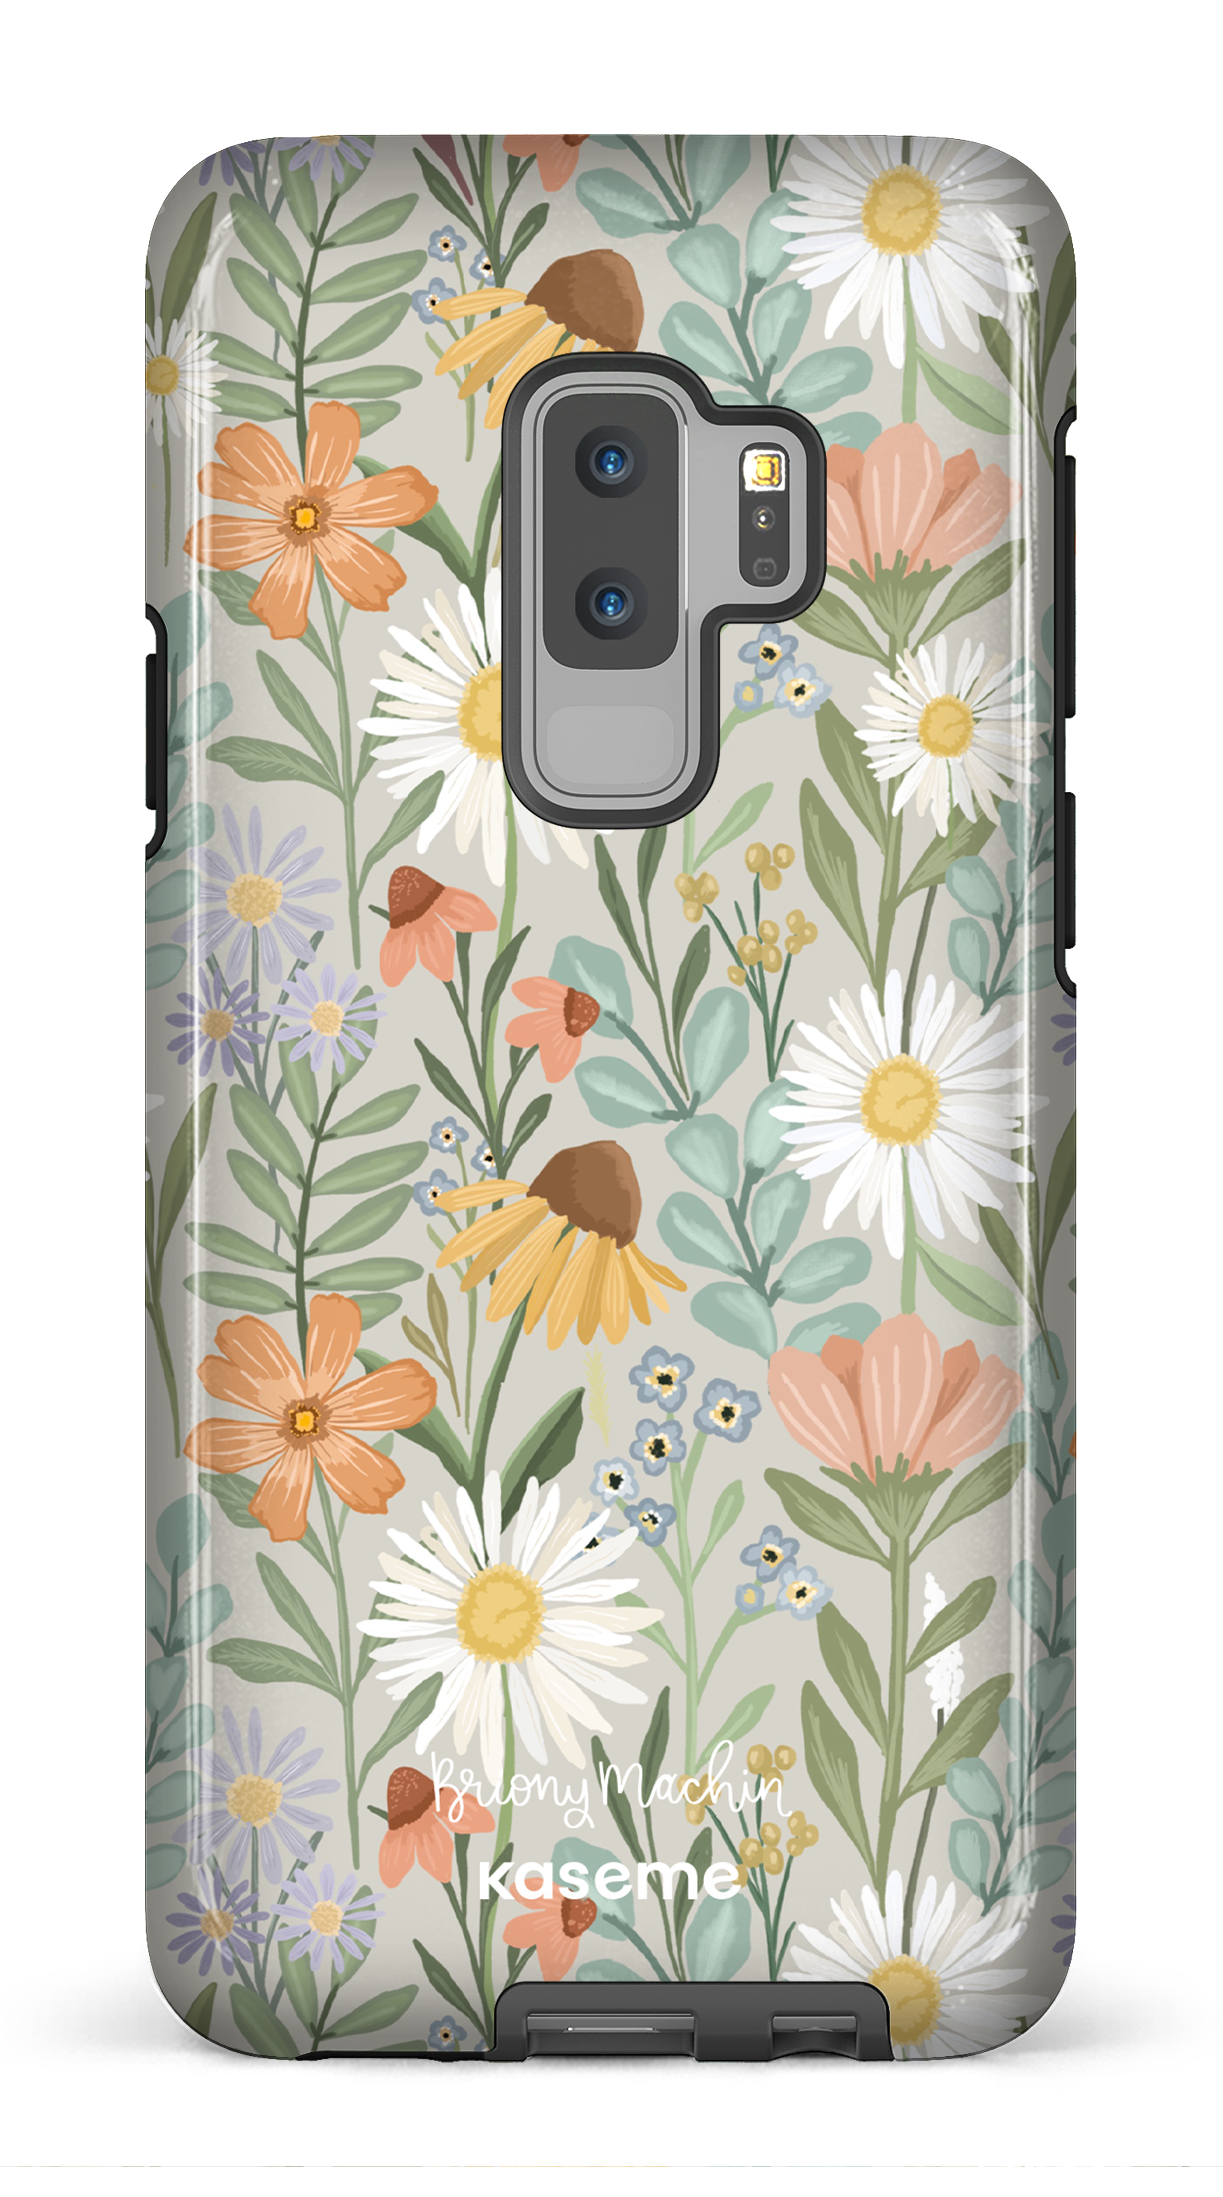 Sending Flowers by Briony Machin - Galaxy S9 Plus